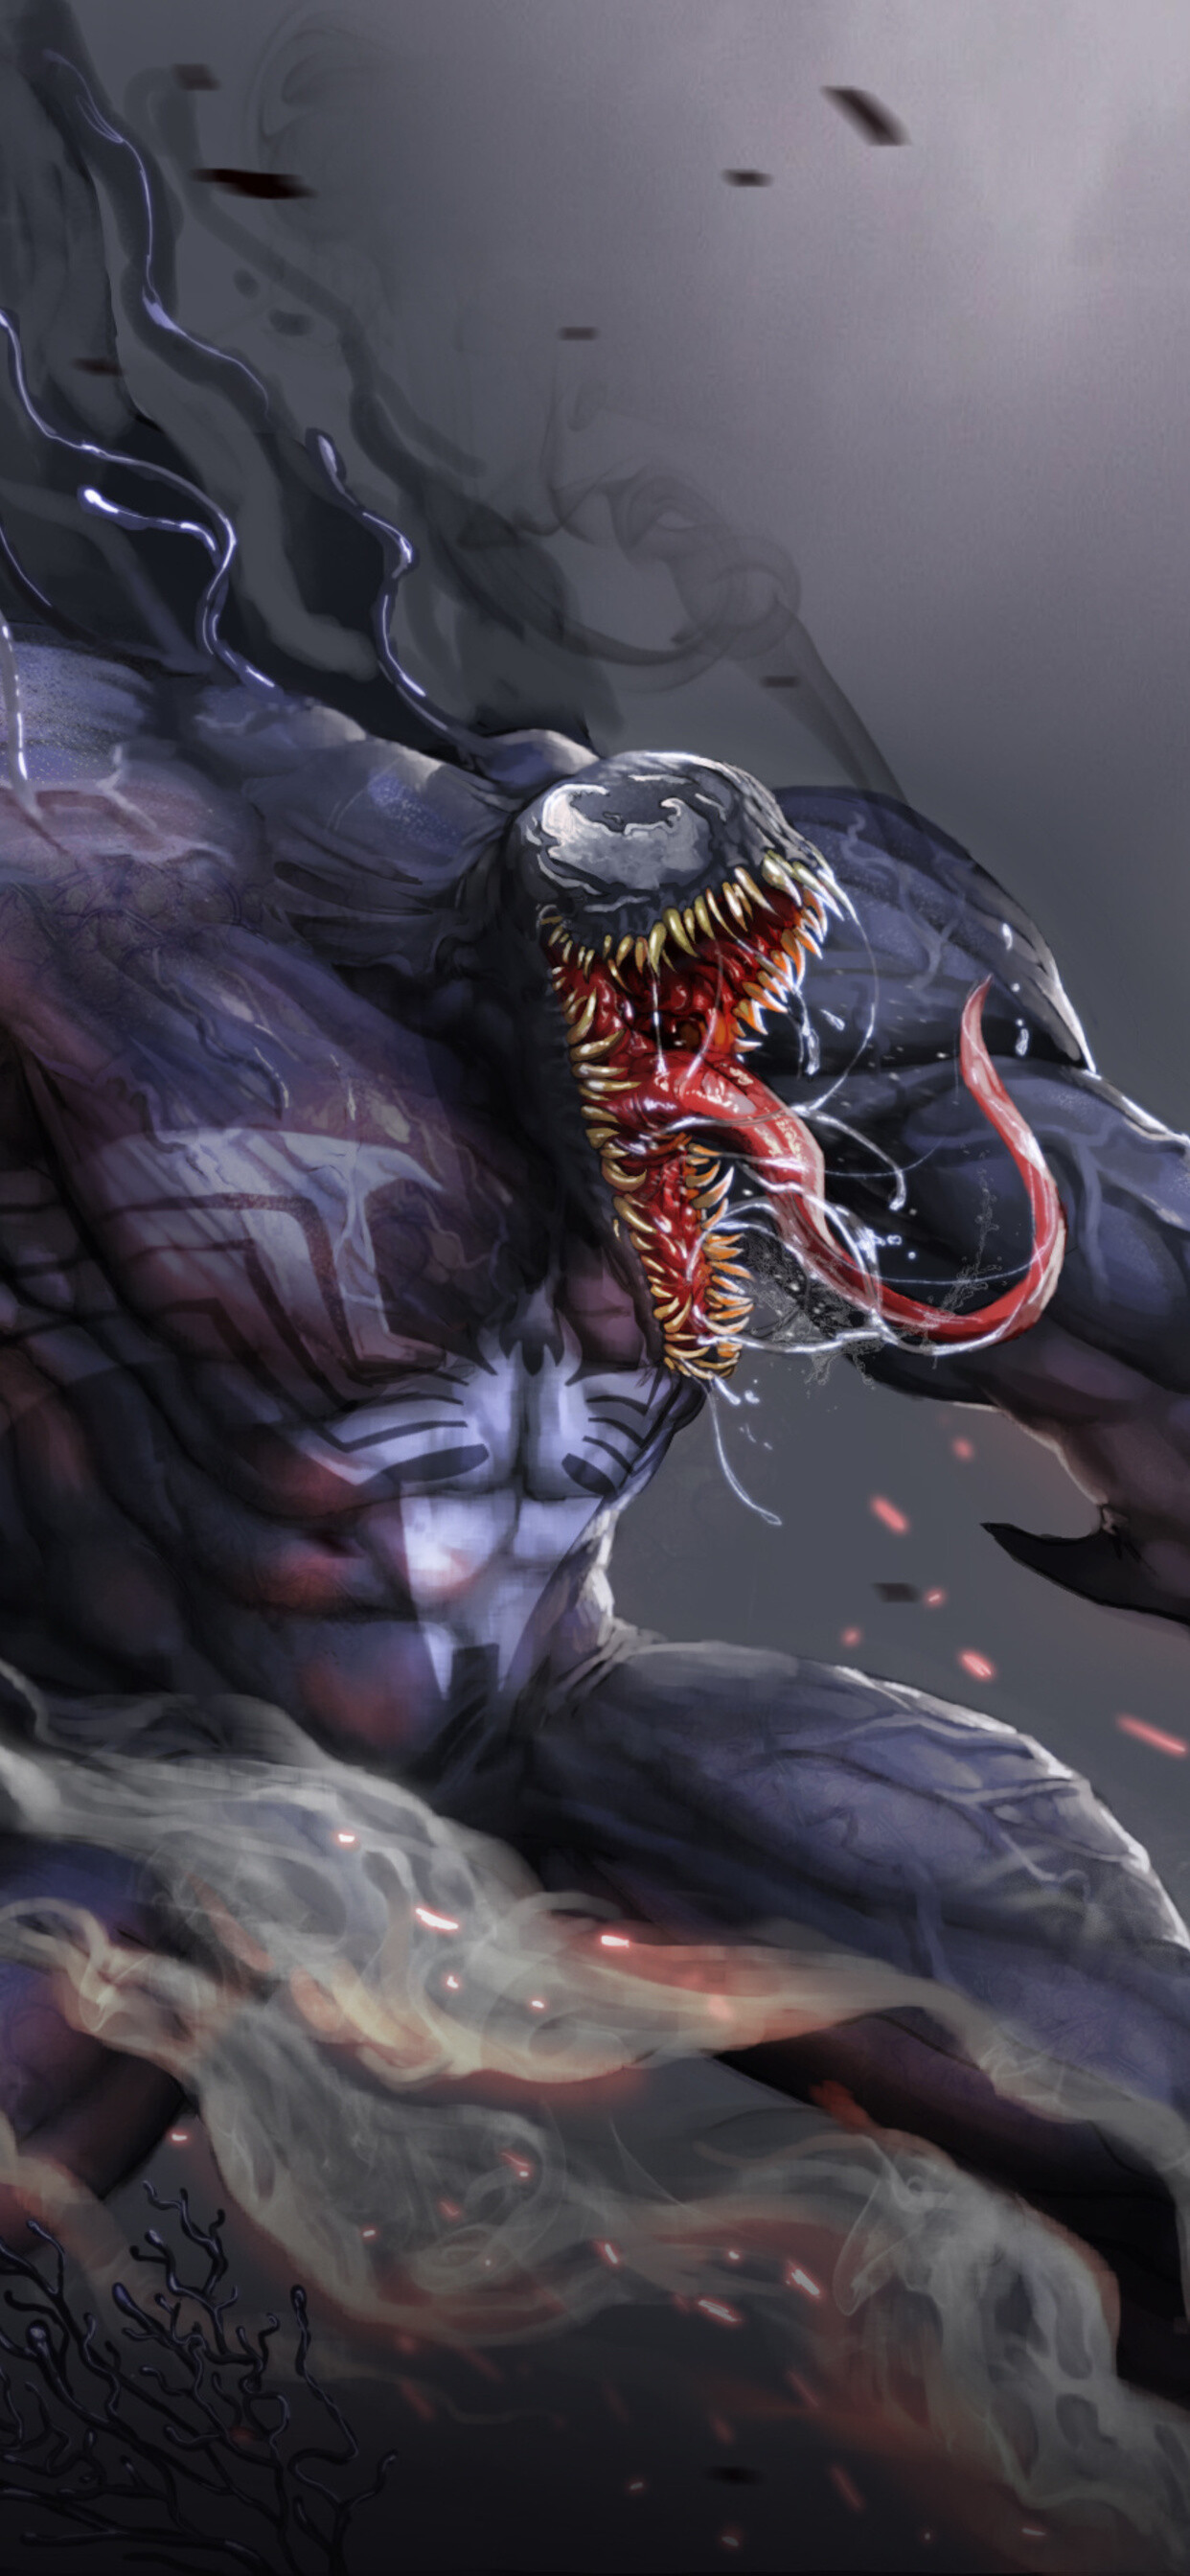 Marvel Villain: Venom, An anti-hero in the Spider-Man franchise. 1250x2690 HD Wallpaper.